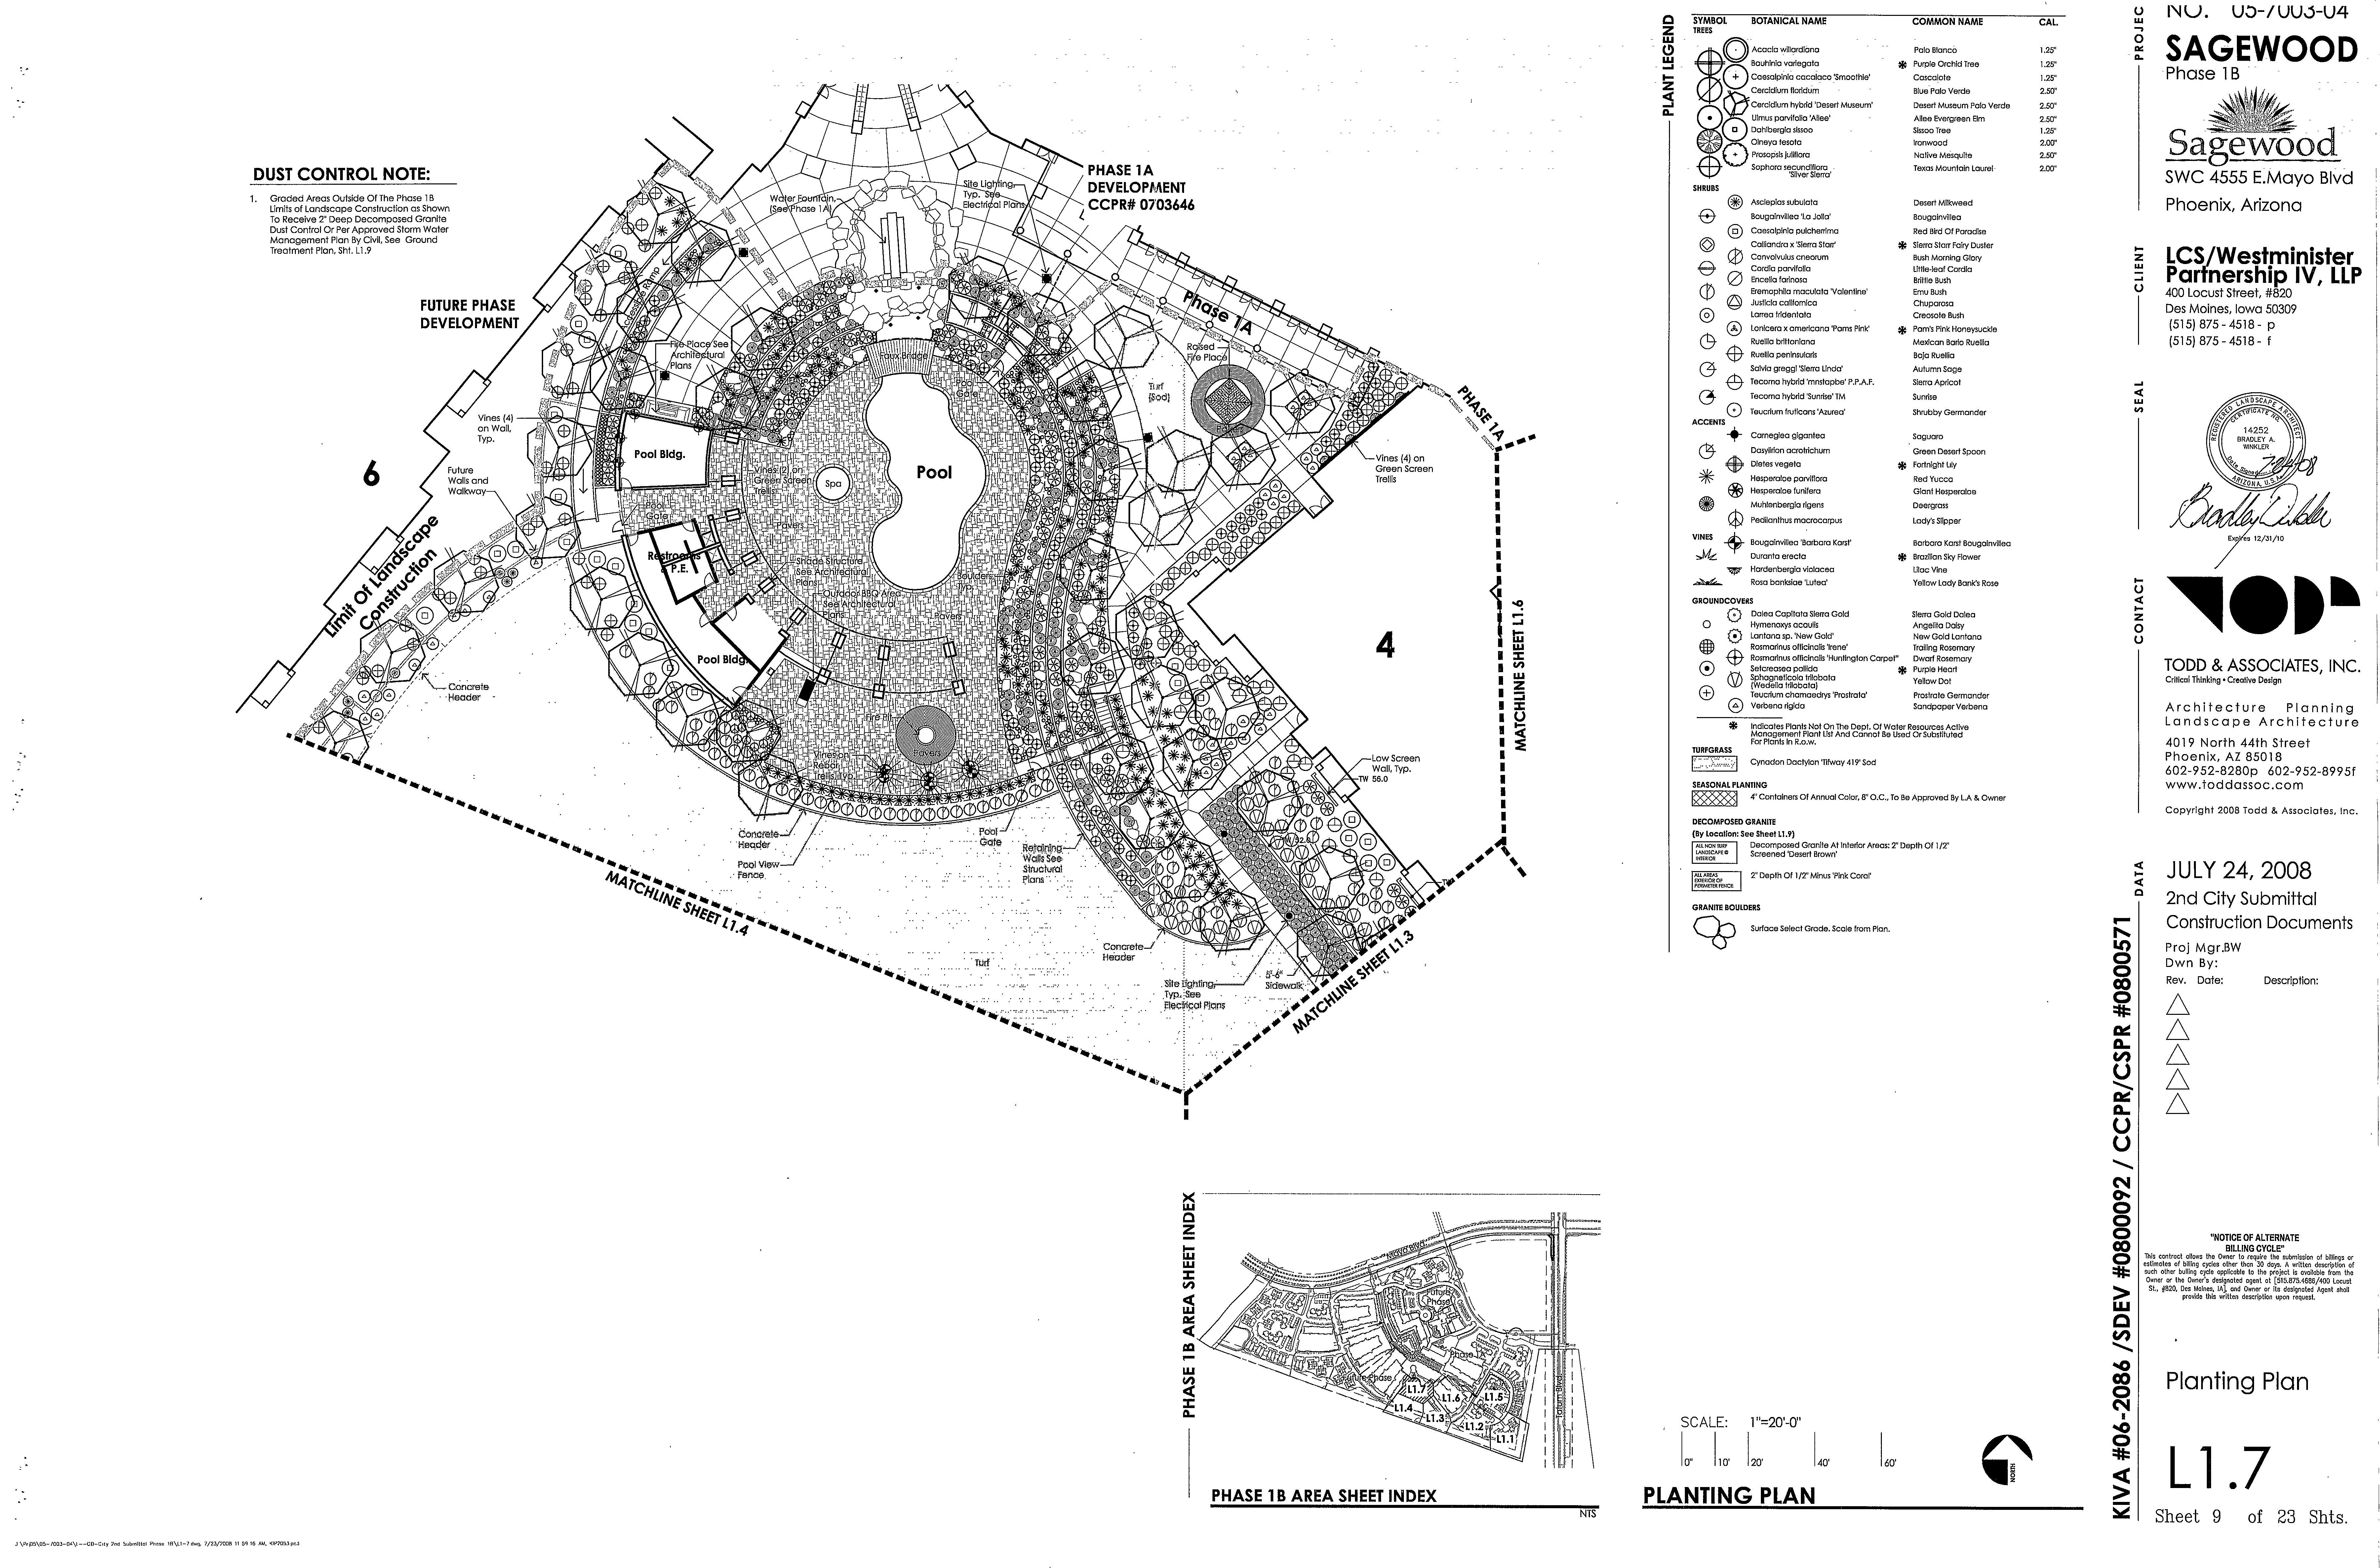 Planting plan of community pool